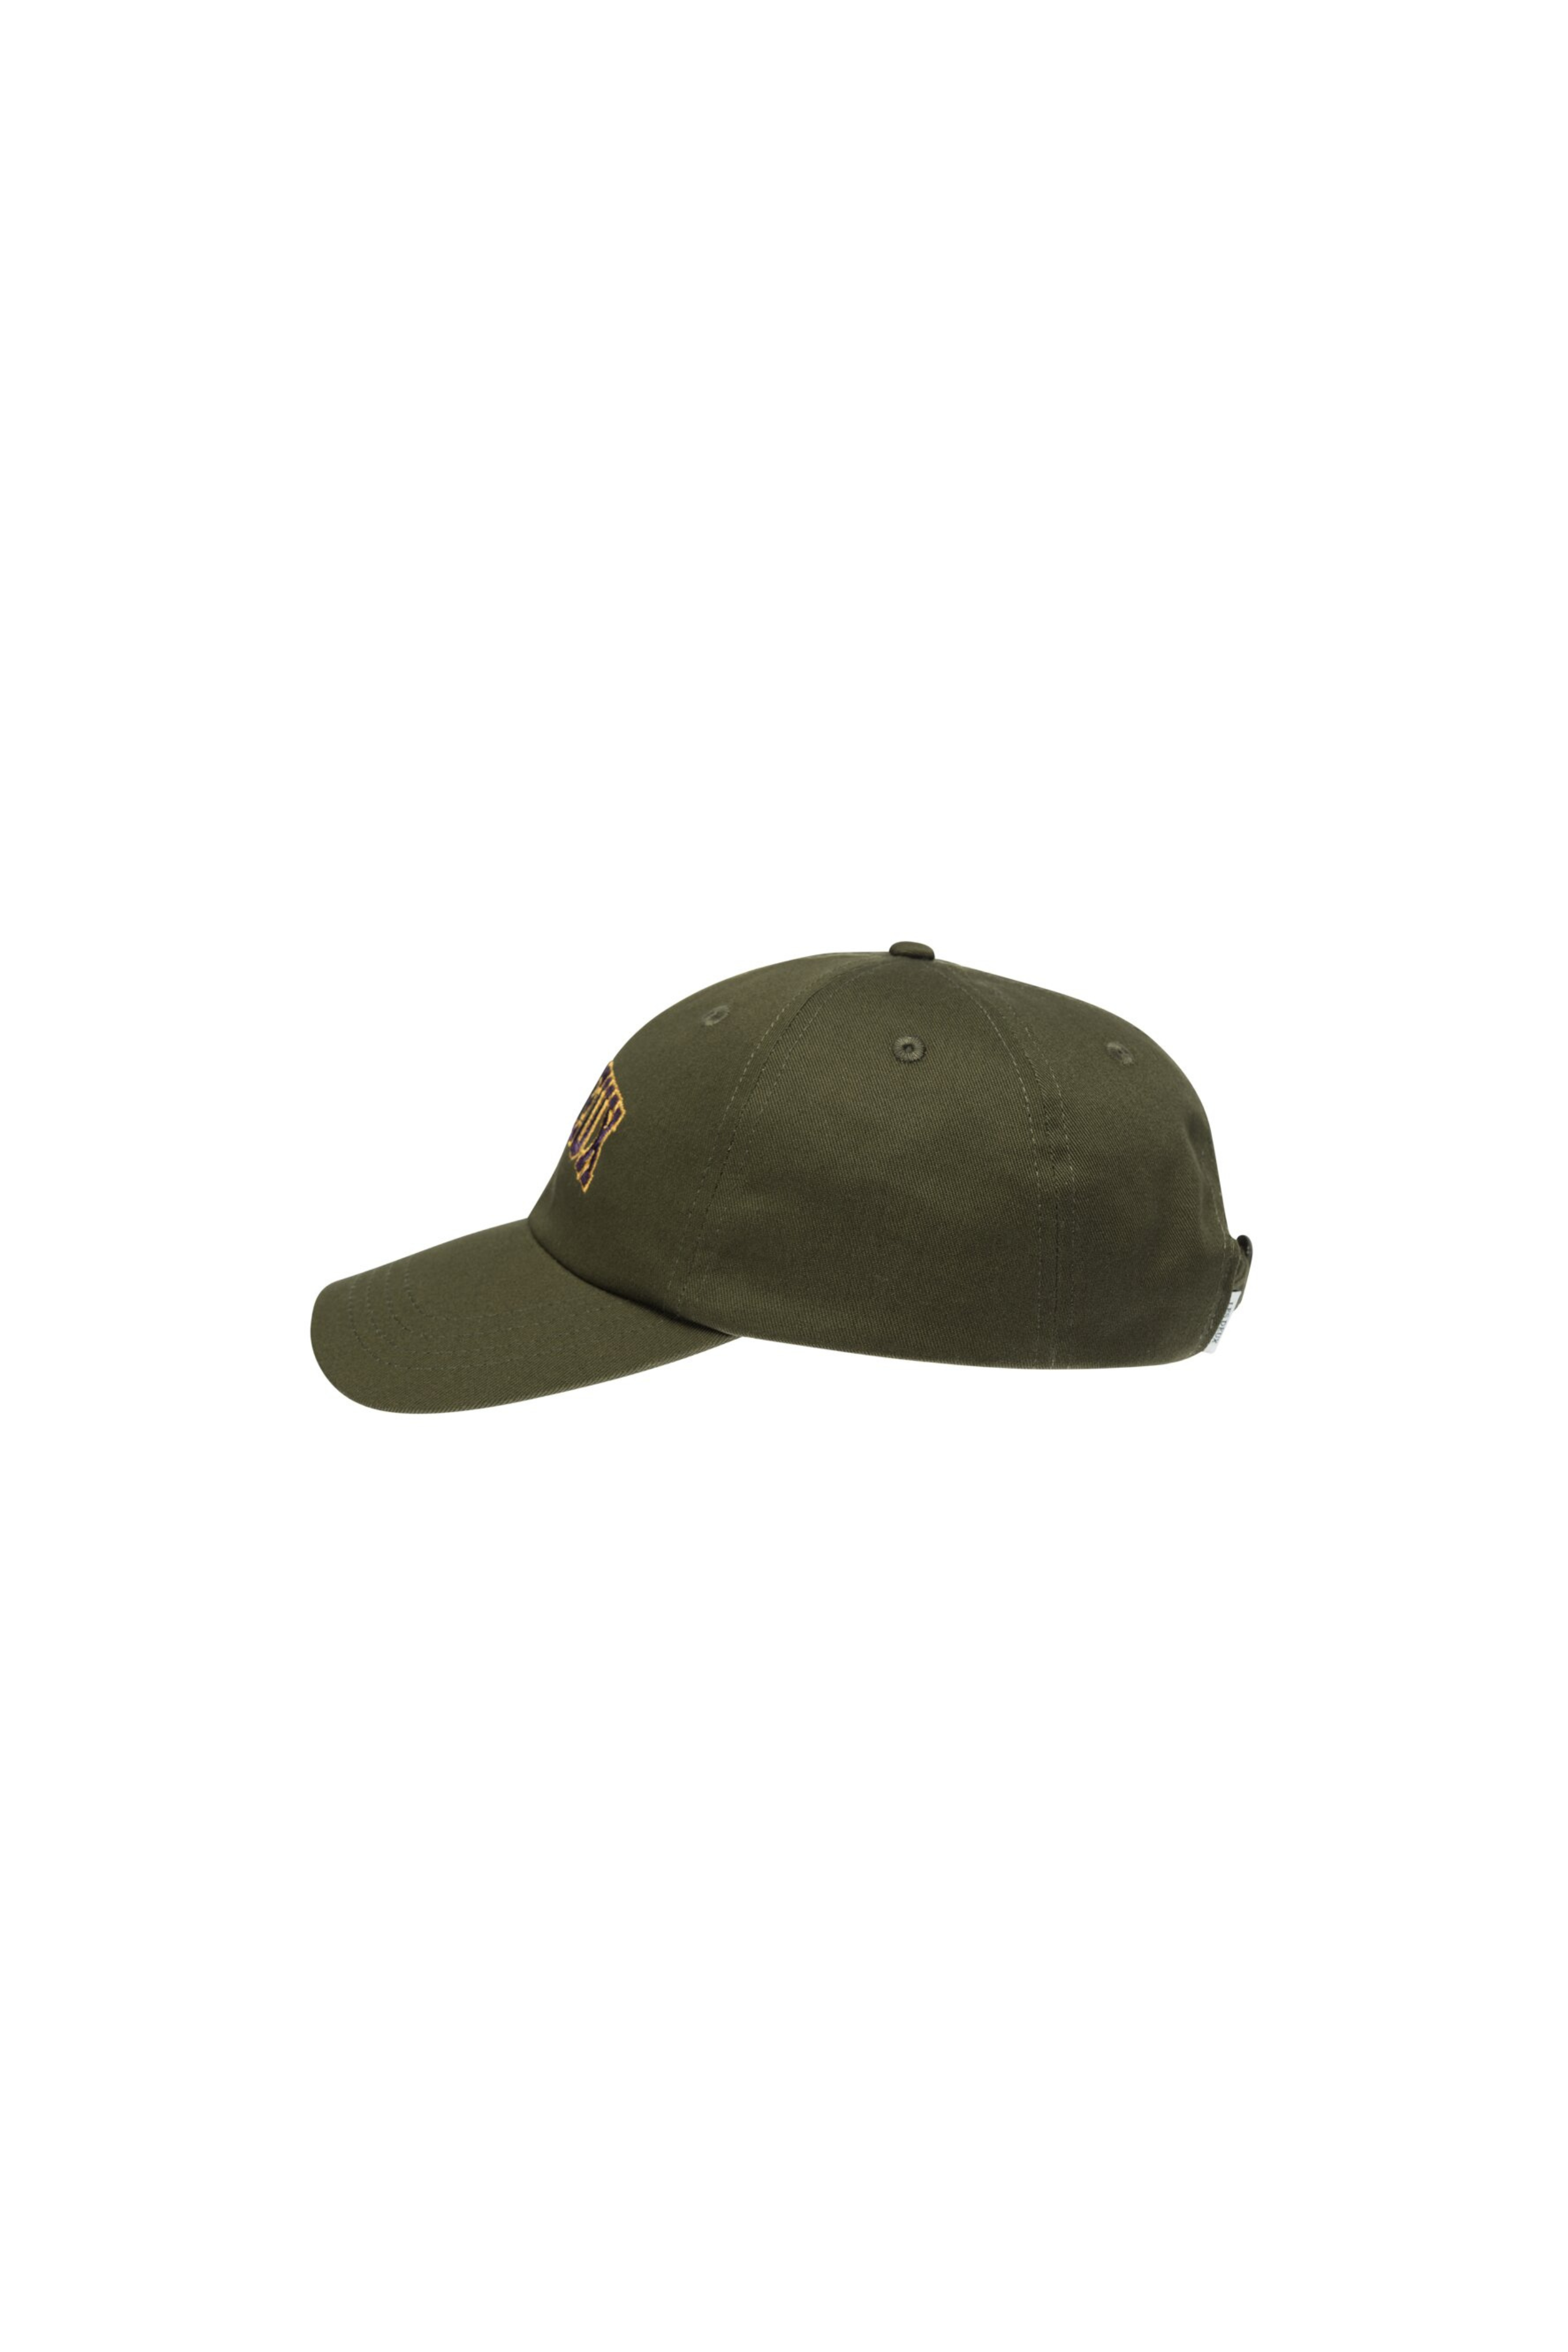 BLAKE DAD CAP2.0 - FOREST GREEN/DUSTY PLUM